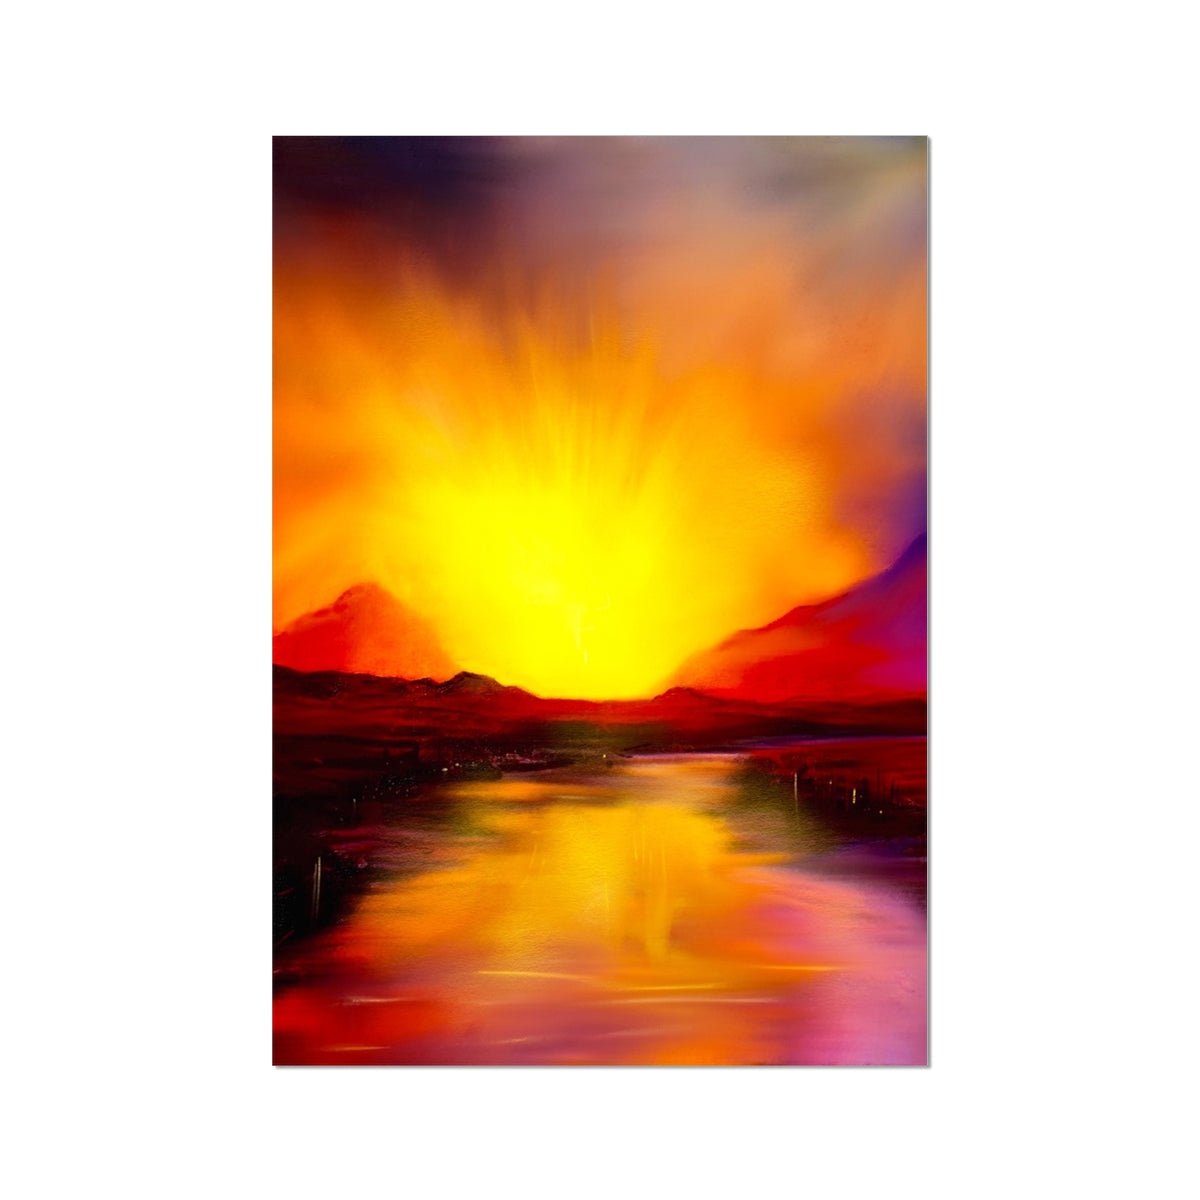 Skye Sunset Painting | Fine Art Prints From Scotland-Unframed Prints-Skye Art Gallery-A2 Portrait-Paintings, Prints, Homeware, Art Gifts From Scotland By Scottish Artist Kevin Hunter